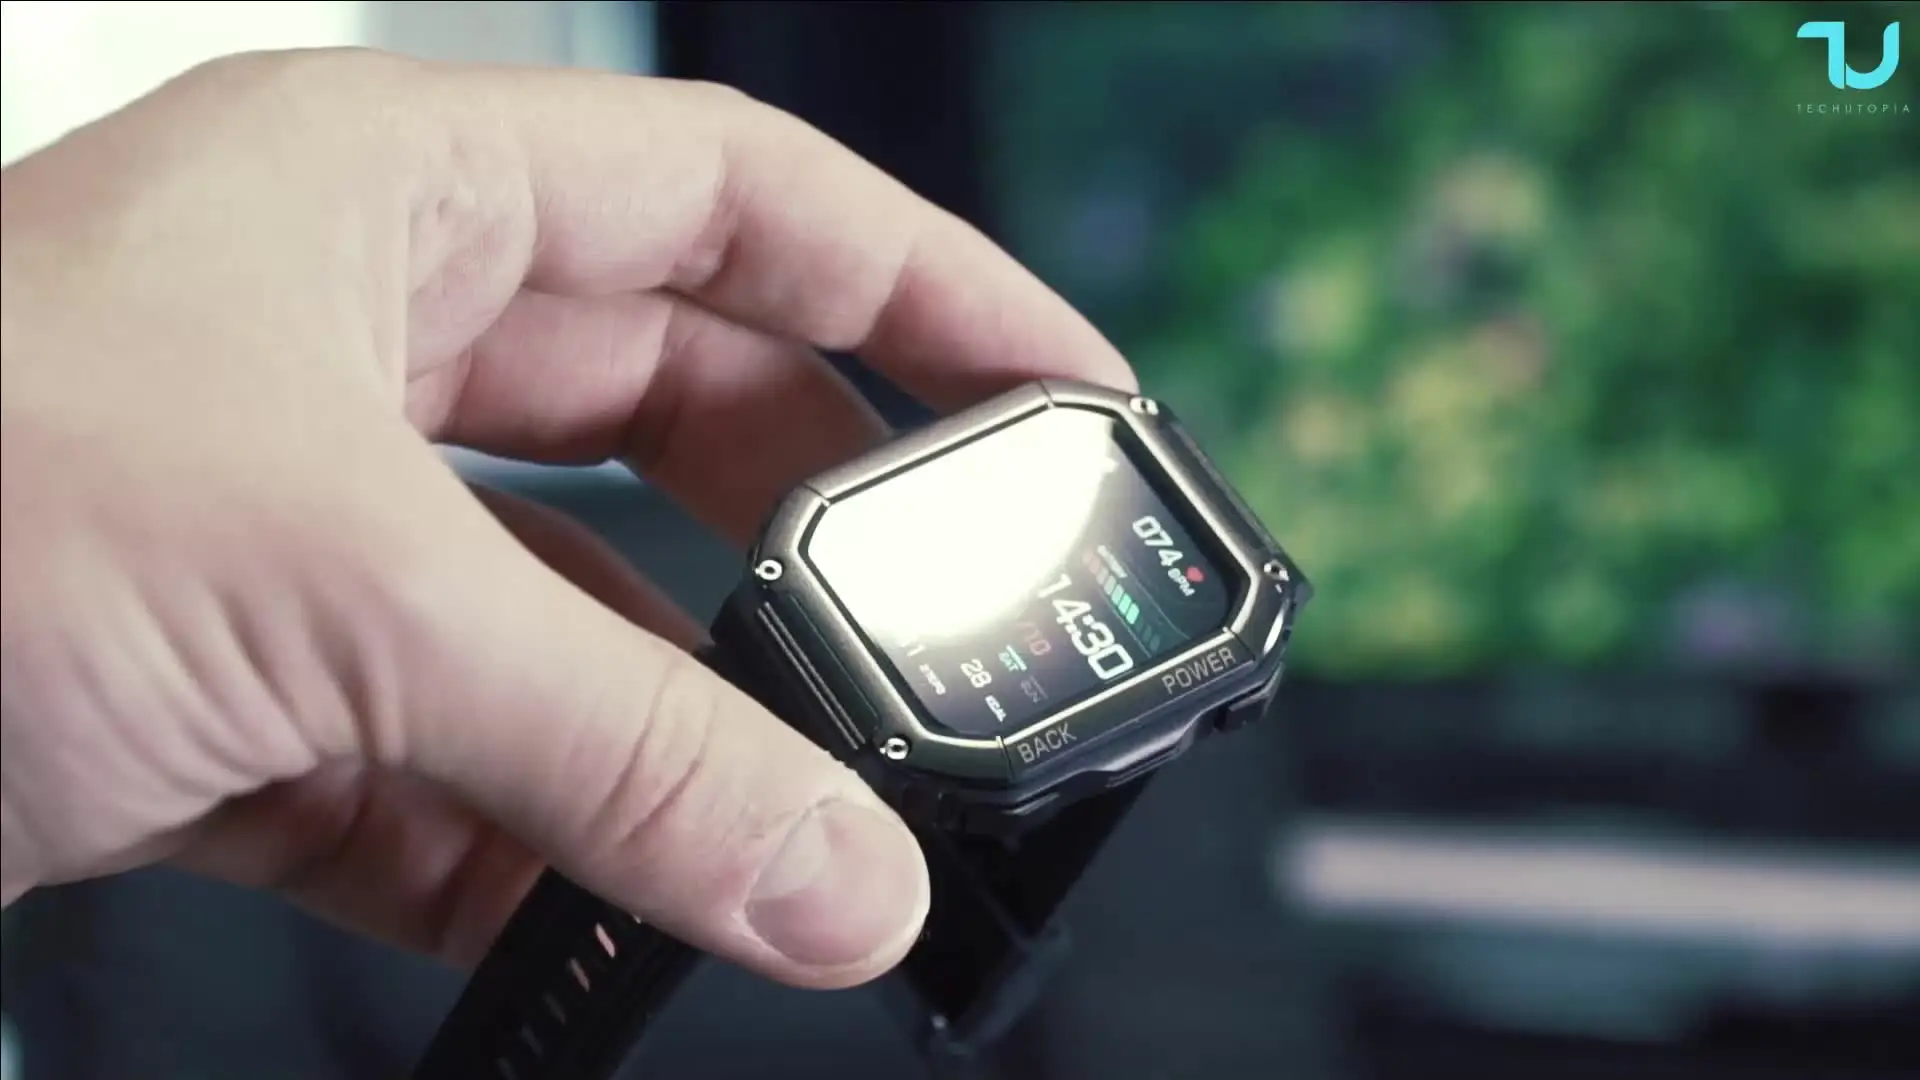 SENBONO C20S 2022 New Smart Watch Men Big Battery Music Play Fitness T –  SENBONO STORE